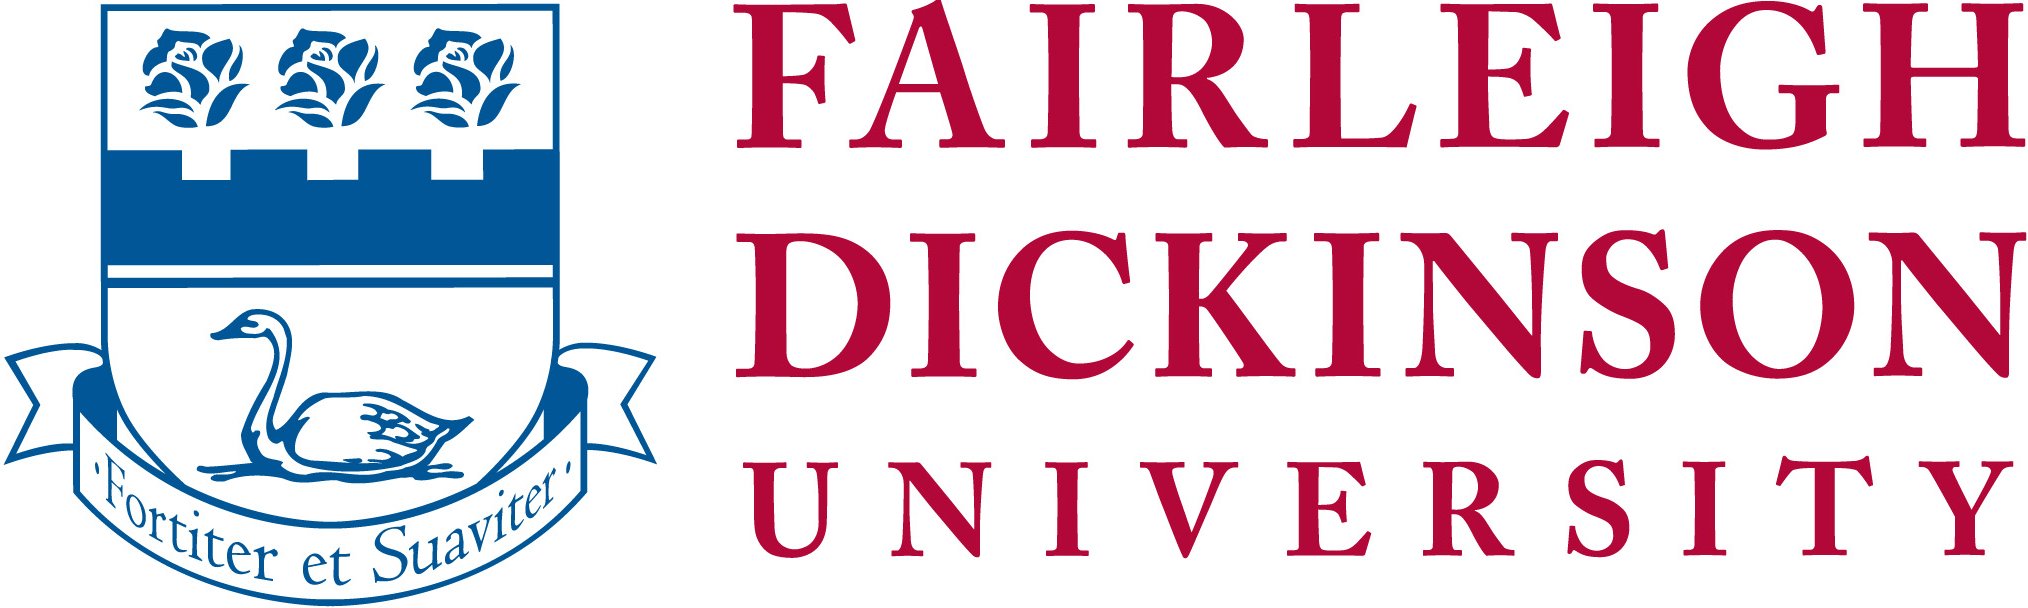 fairleigh-dickinson-university-vancouver